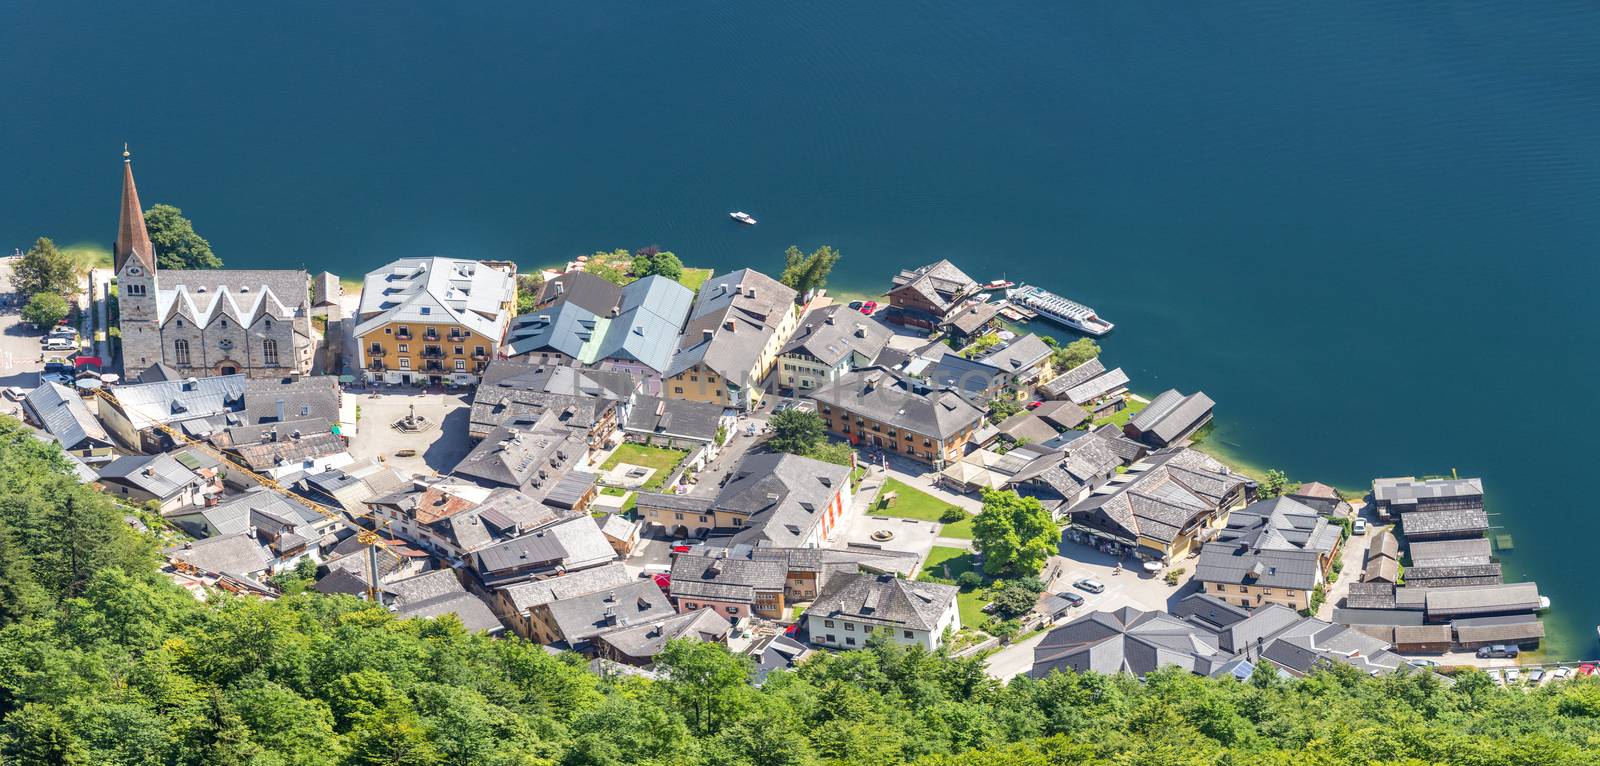 Aerial view of Hallstatt village in Alps, Austria